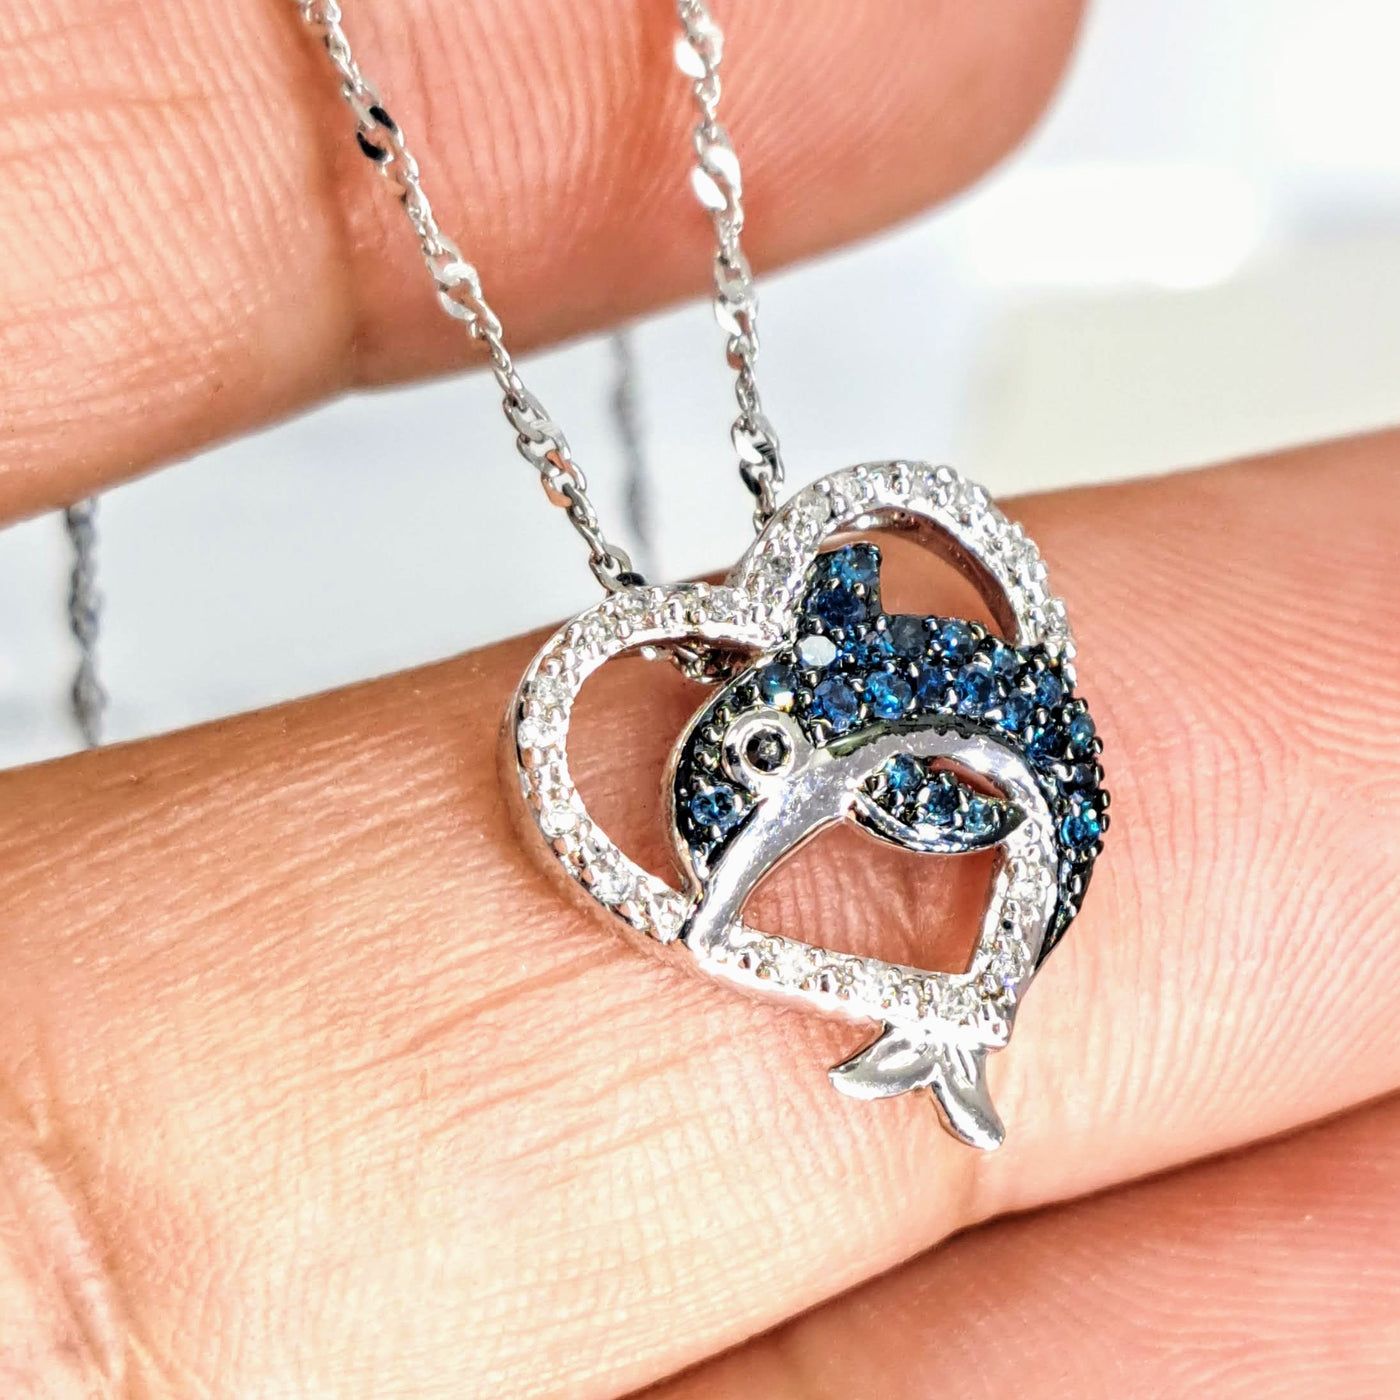 "I <3 Dolphins!" Pendant Necklace - Blue & White Diamonds, Anti-tarnish Sterling